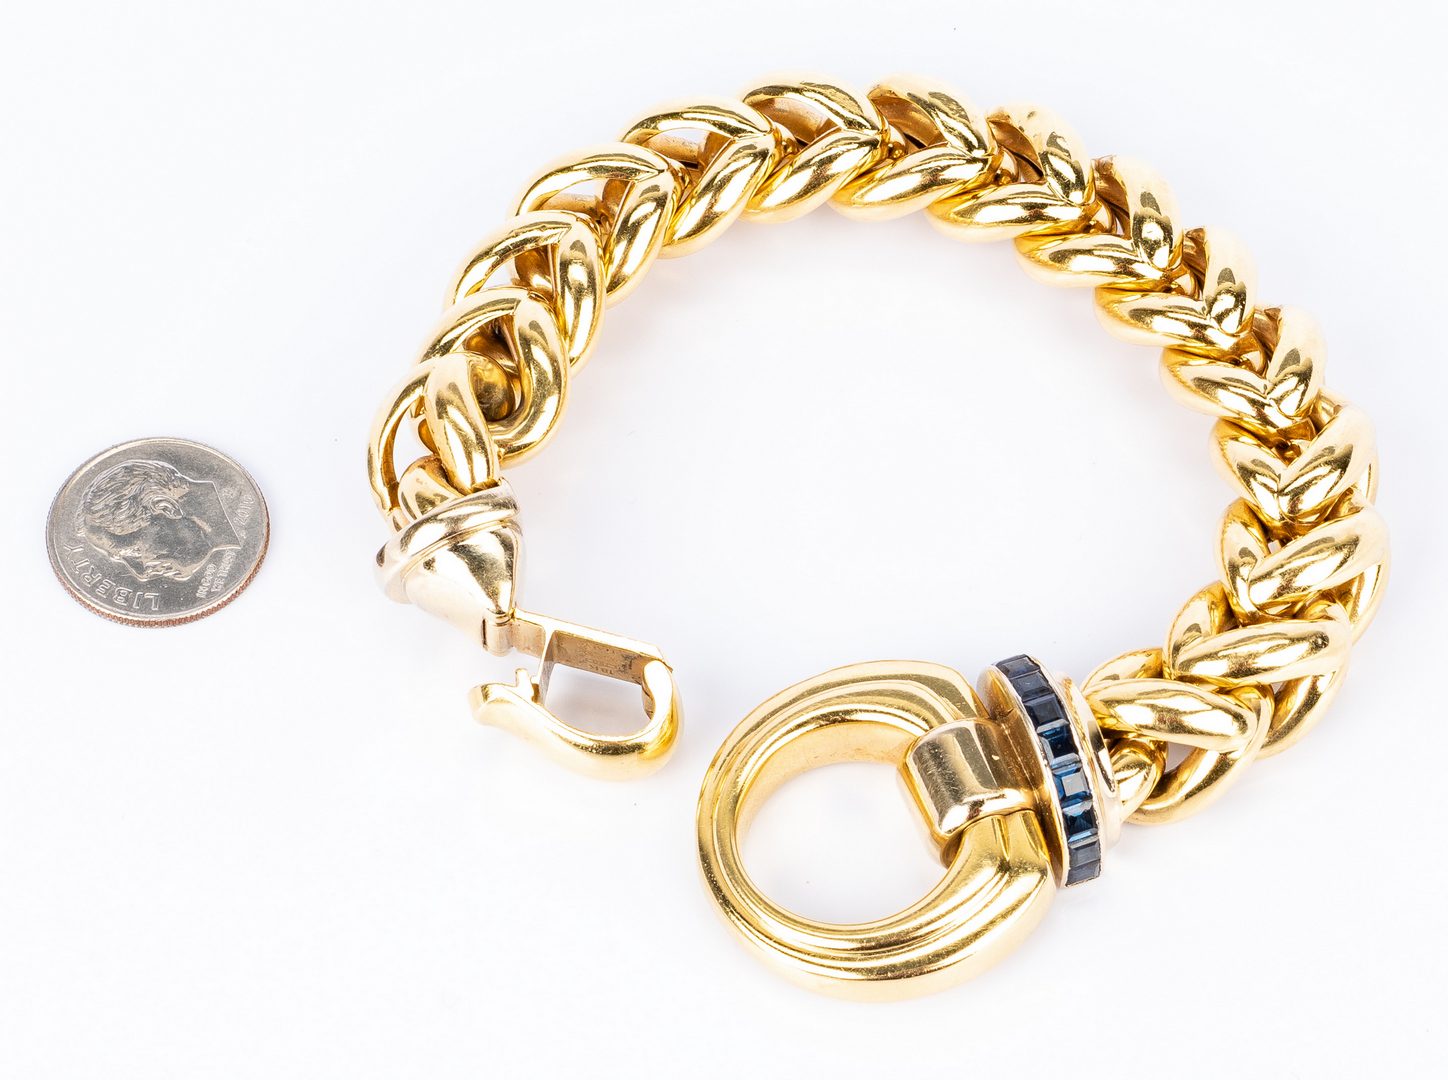 Lot 39: 18K Signoretti Bracelet with Sapphires